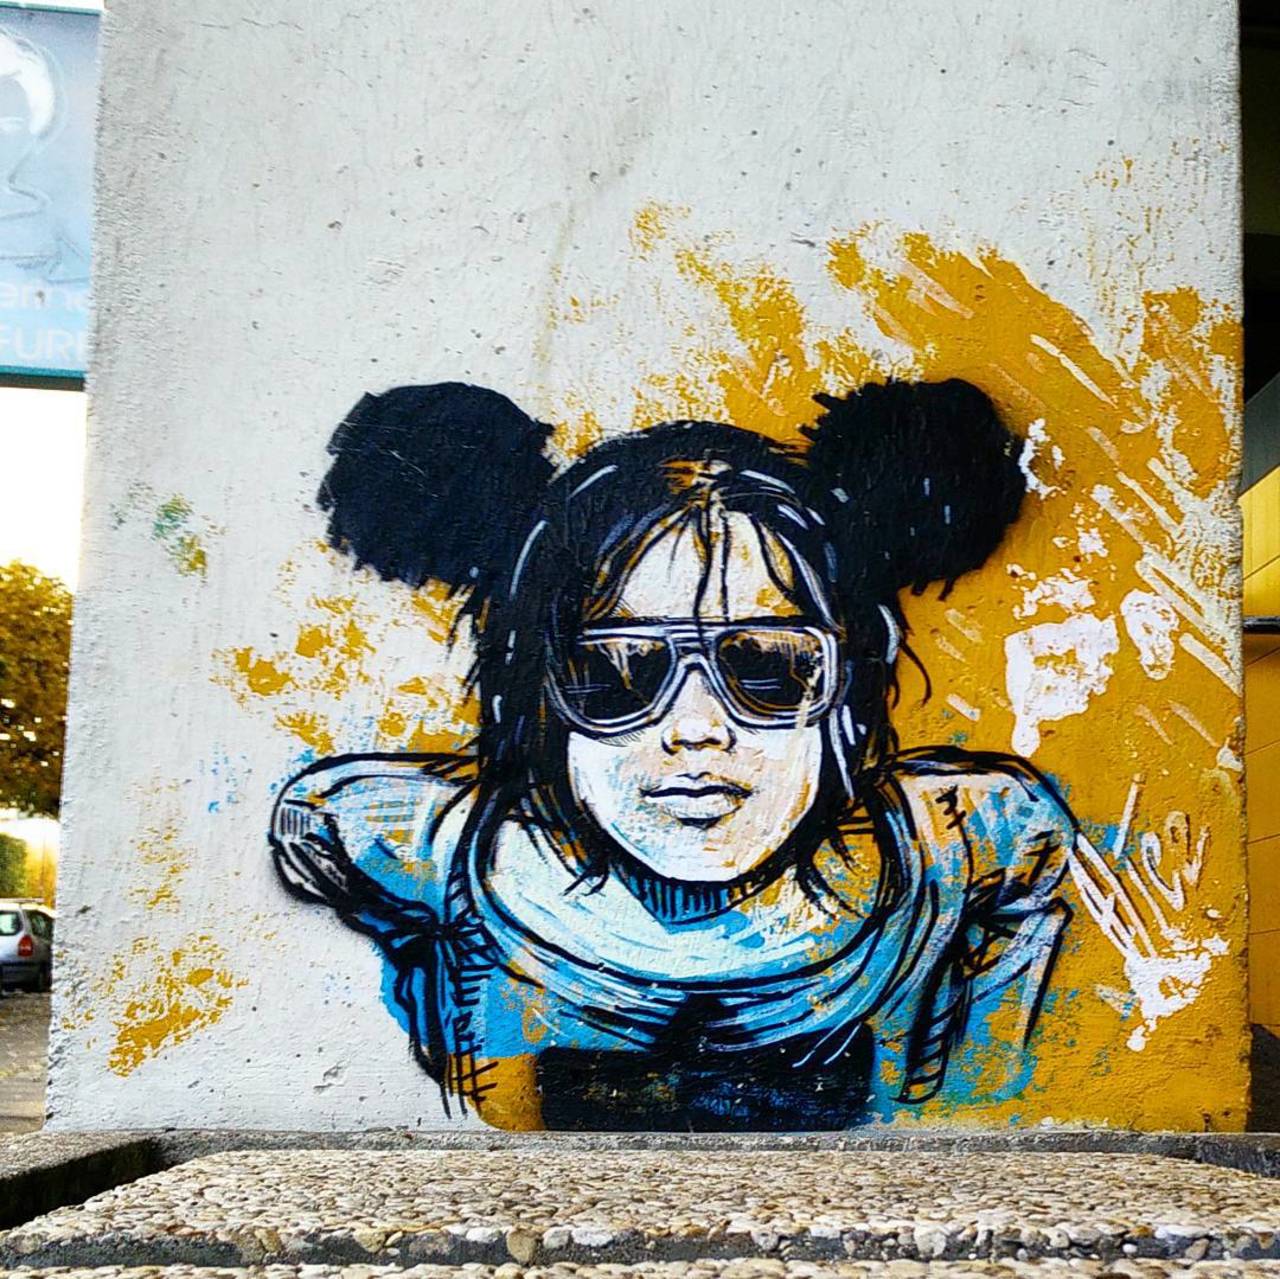 #Paris #graffiti photo by @ceky_art http://ift.tt/1GB8kPb #StreetArt https://t.co/NFXTCDmTYE